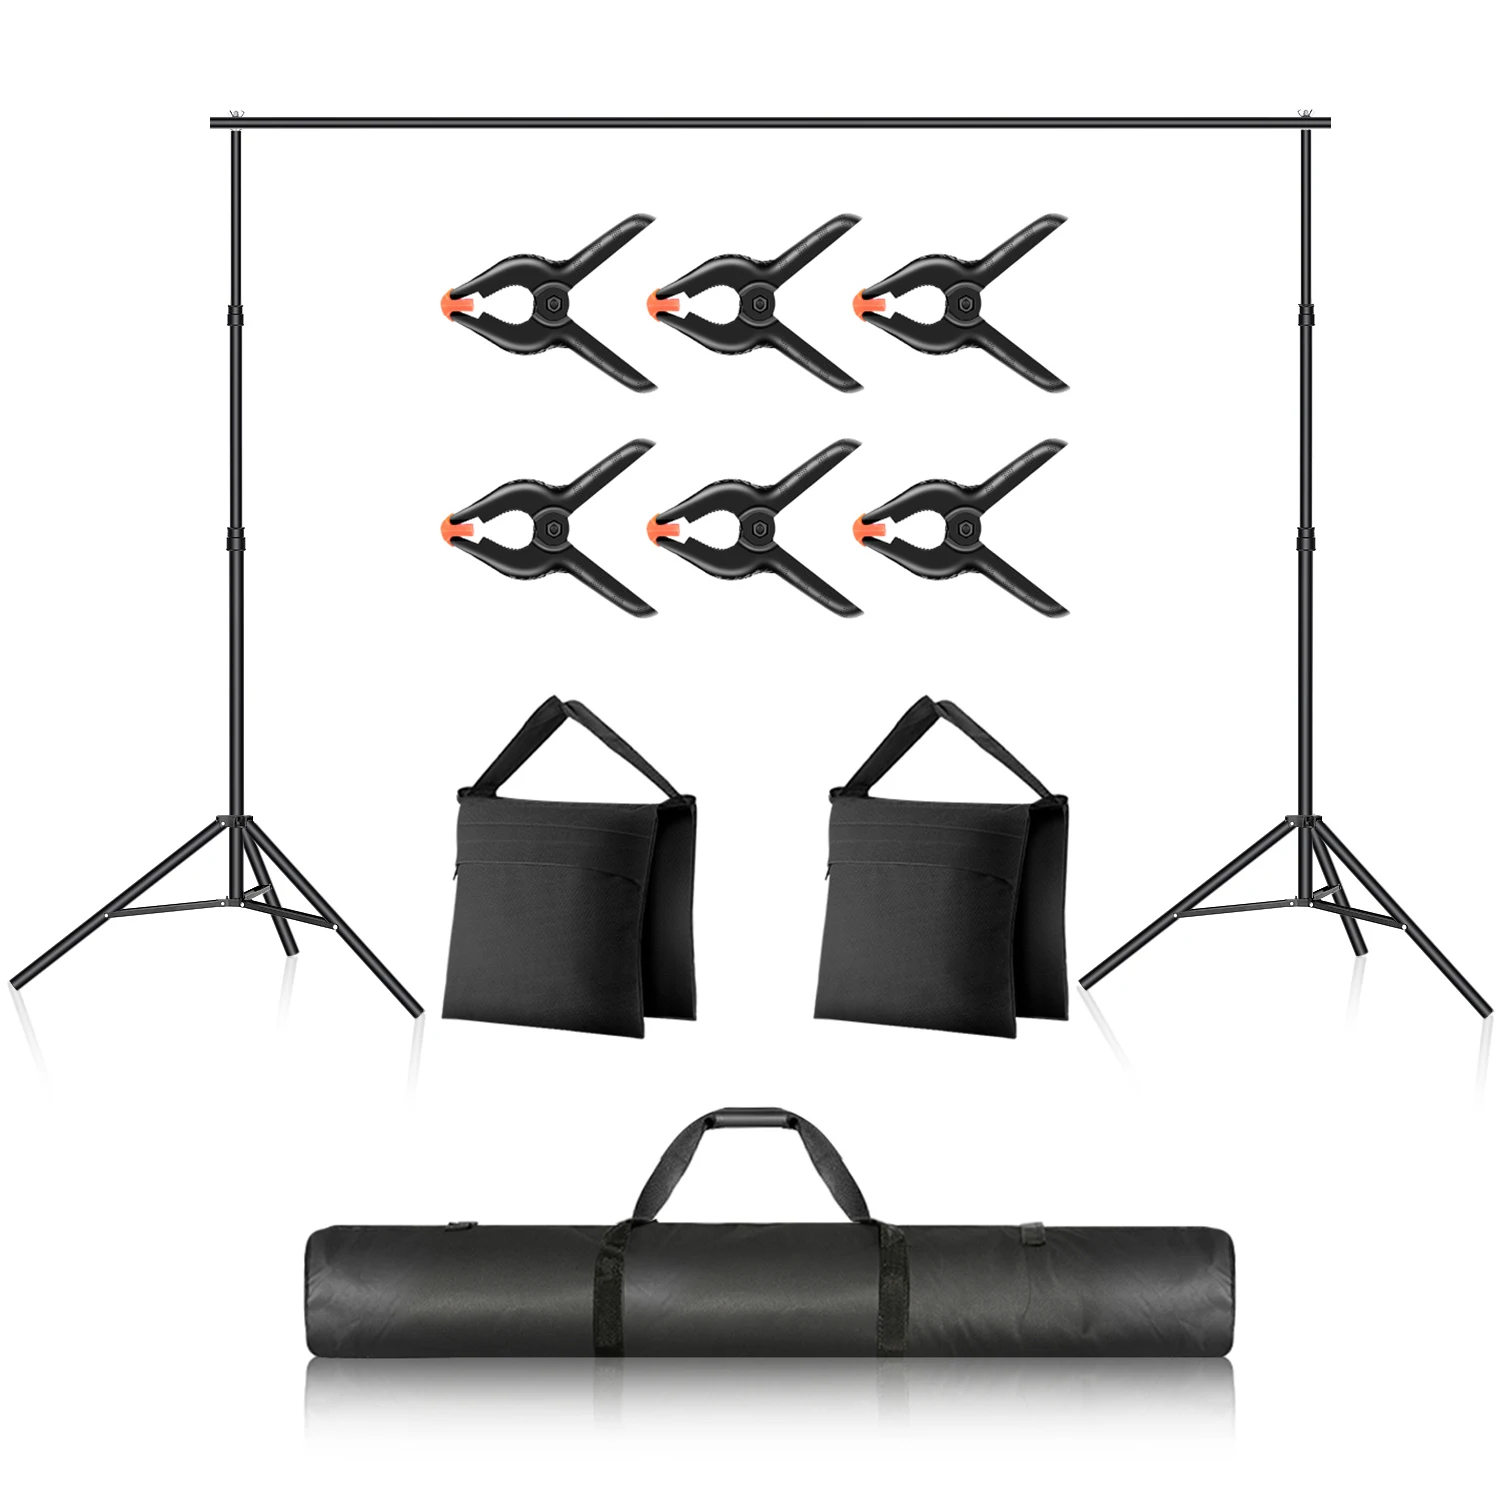 2 Free Backdrops Studio Background BLACK 8 x 10 ft Photo Backdrop Stand Kit 